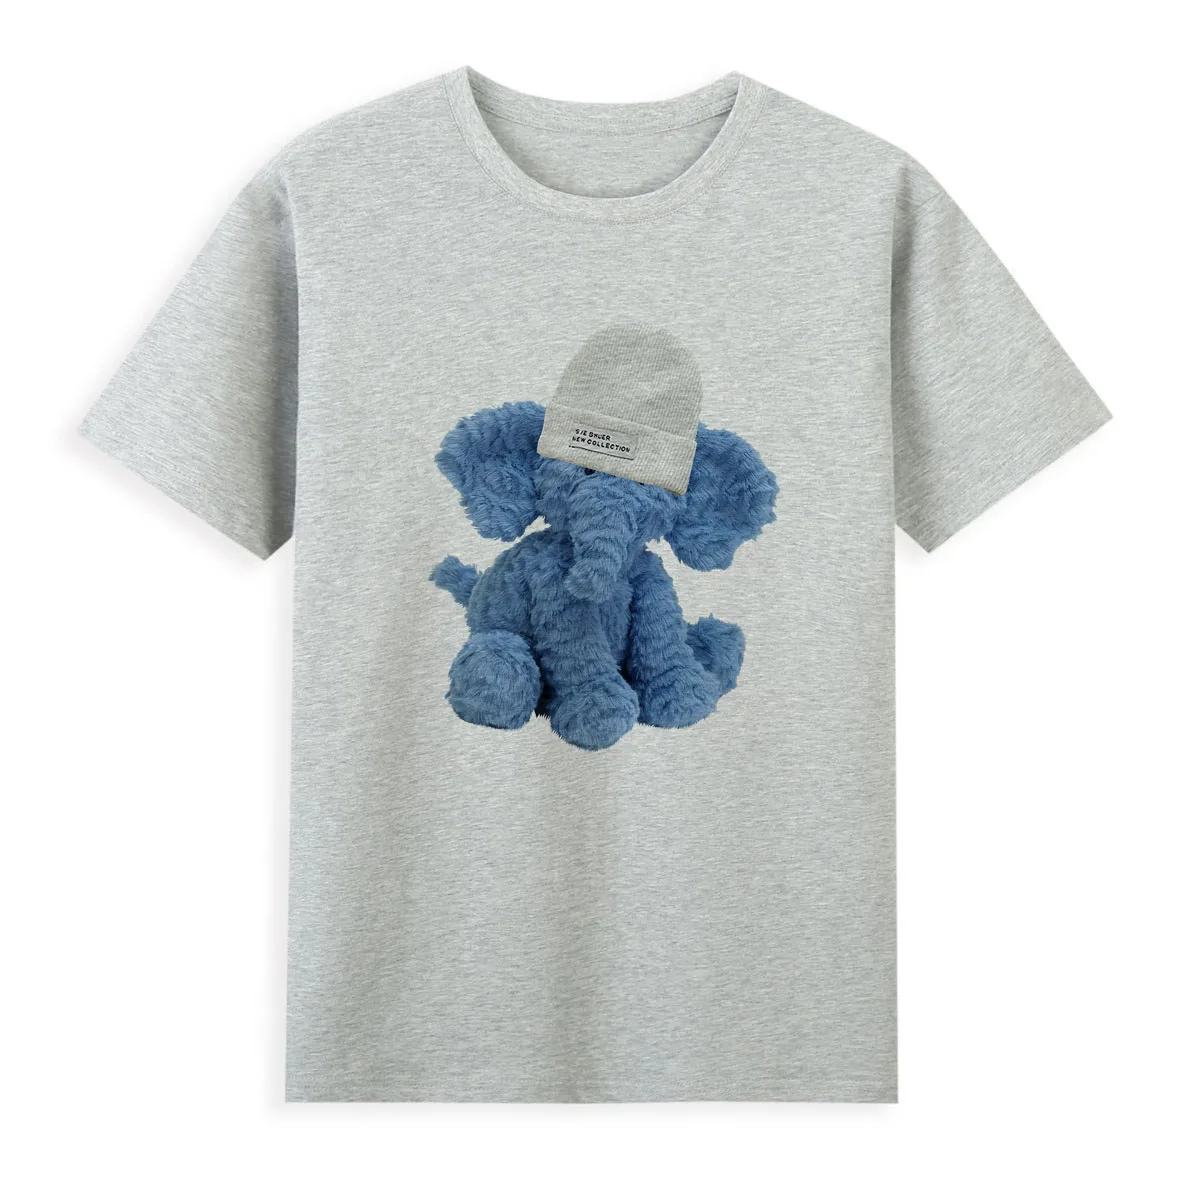 

Plush Blue Elephant T-shirt Summer Short Sleeve Casual Tees Female Top Cheap Women's Clothing A0120